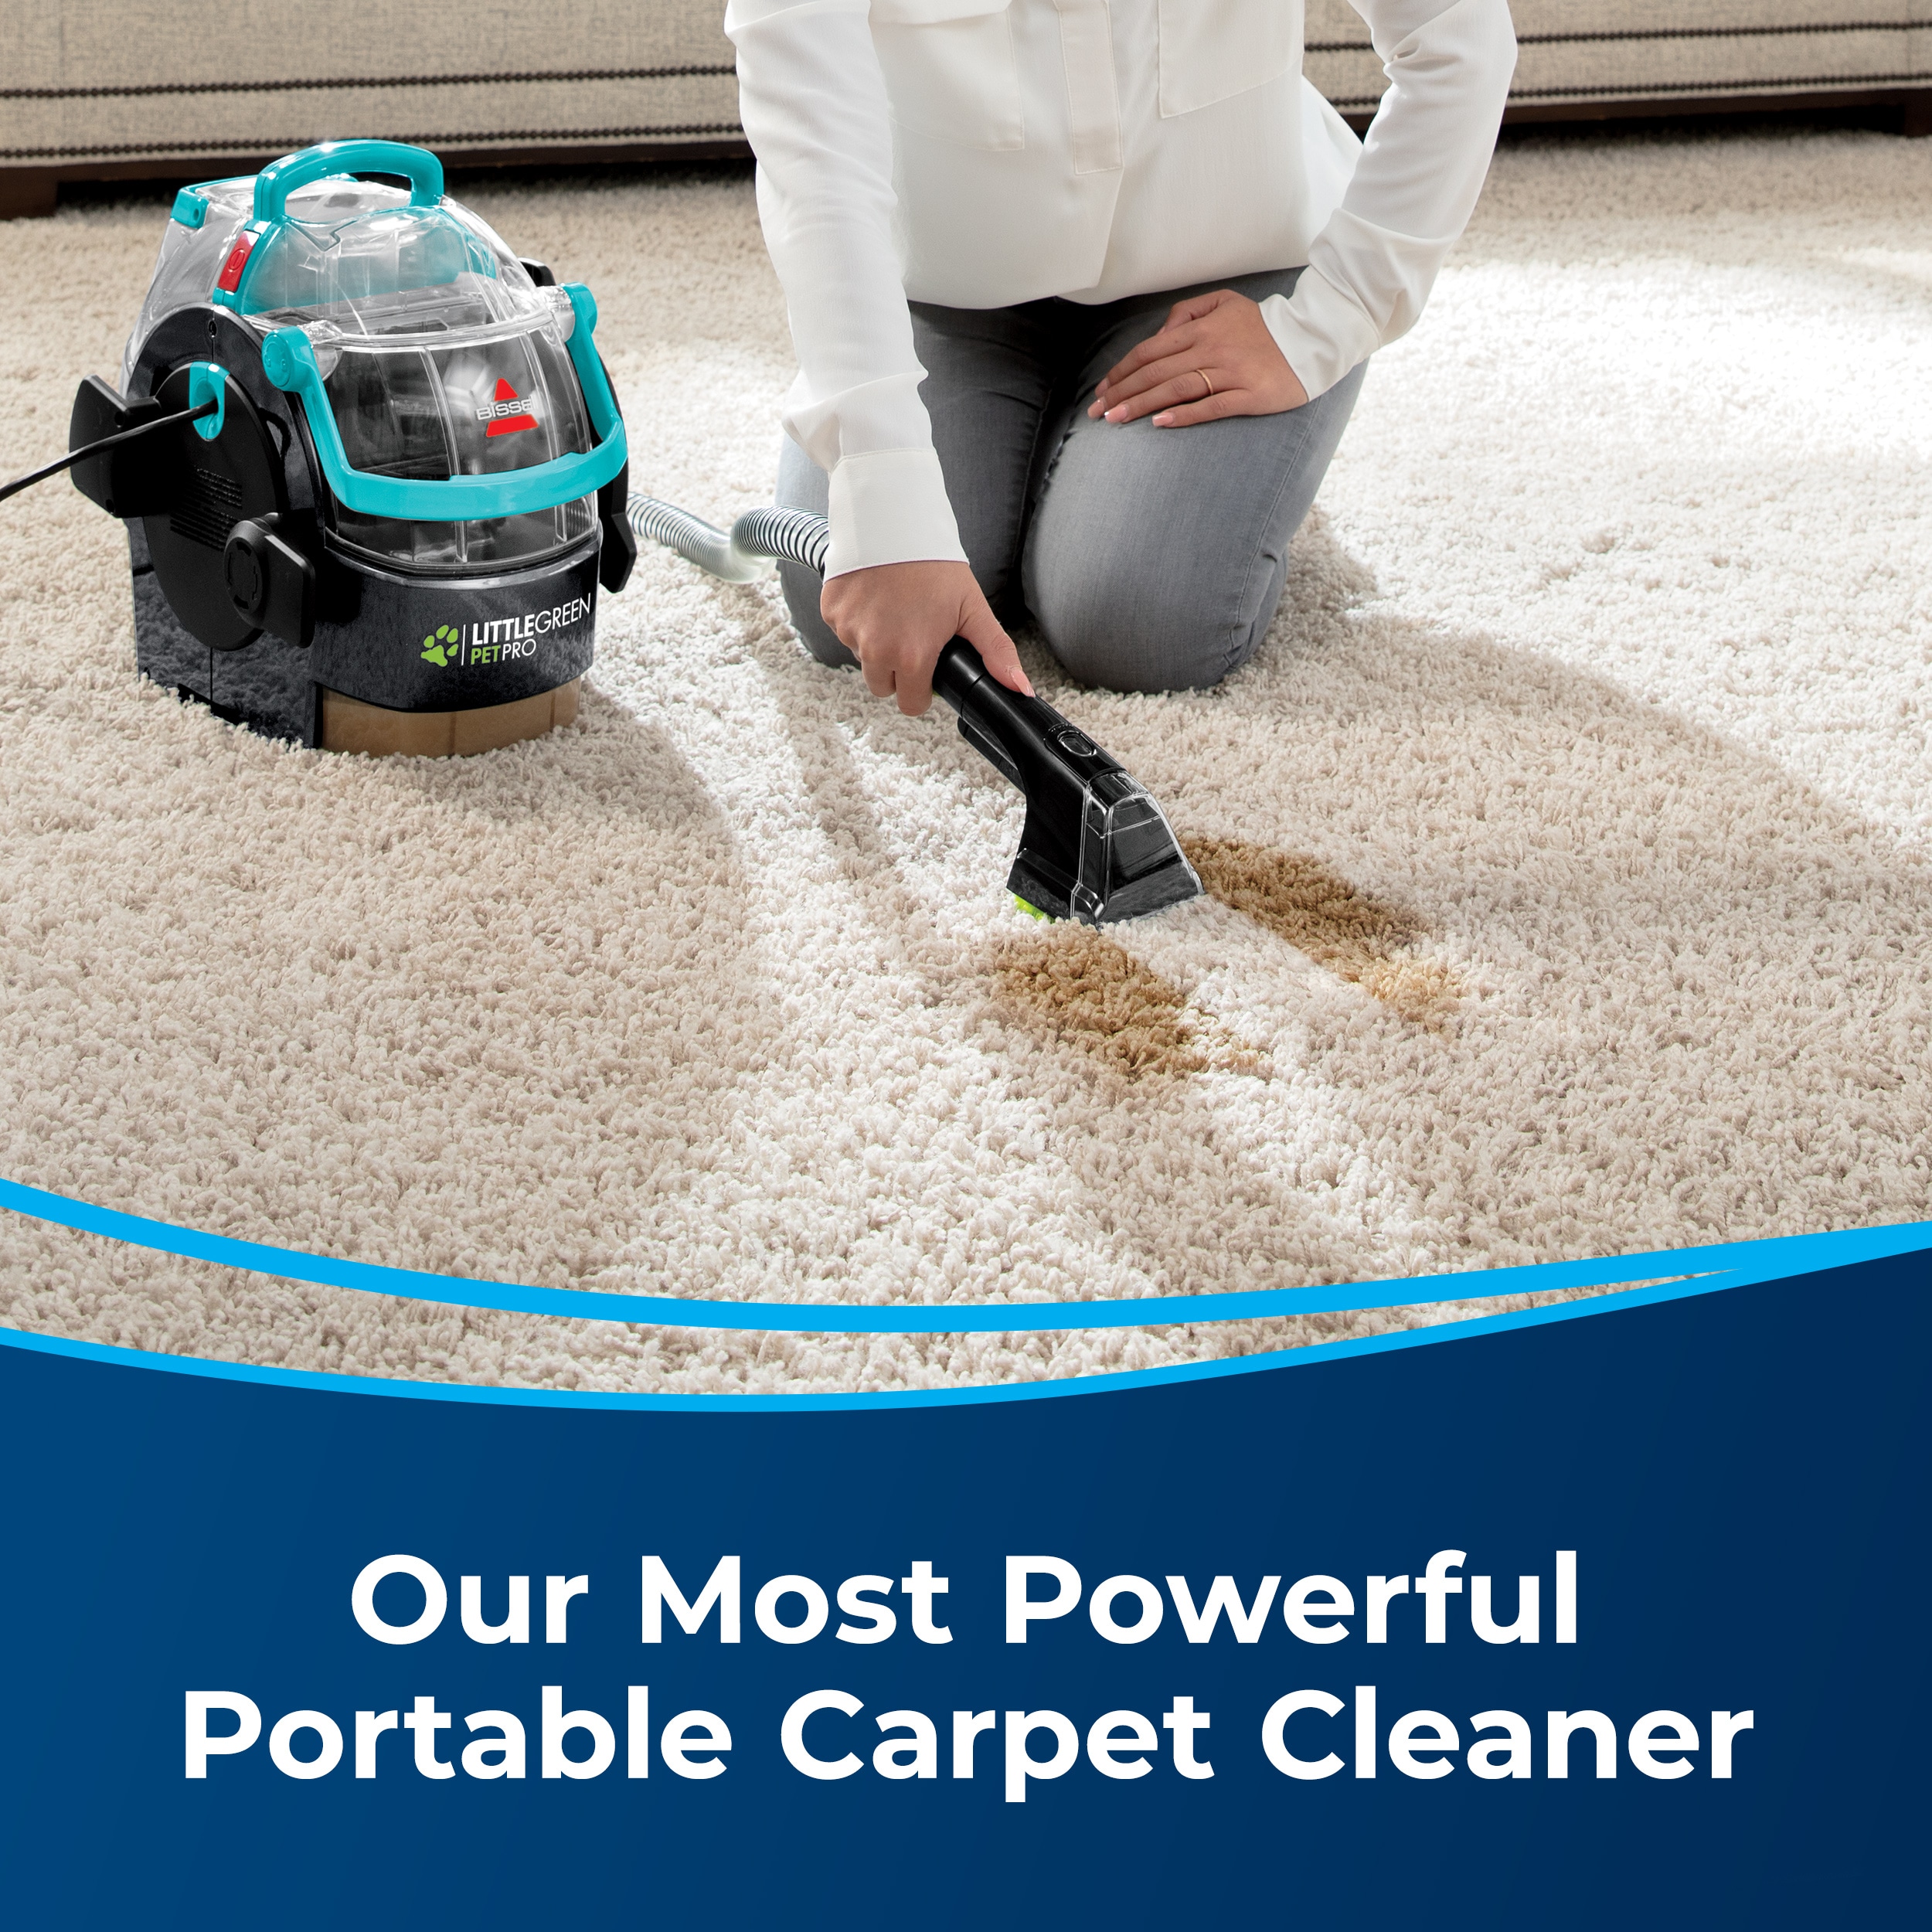 Carpet Cleaner Rental at Lowe's